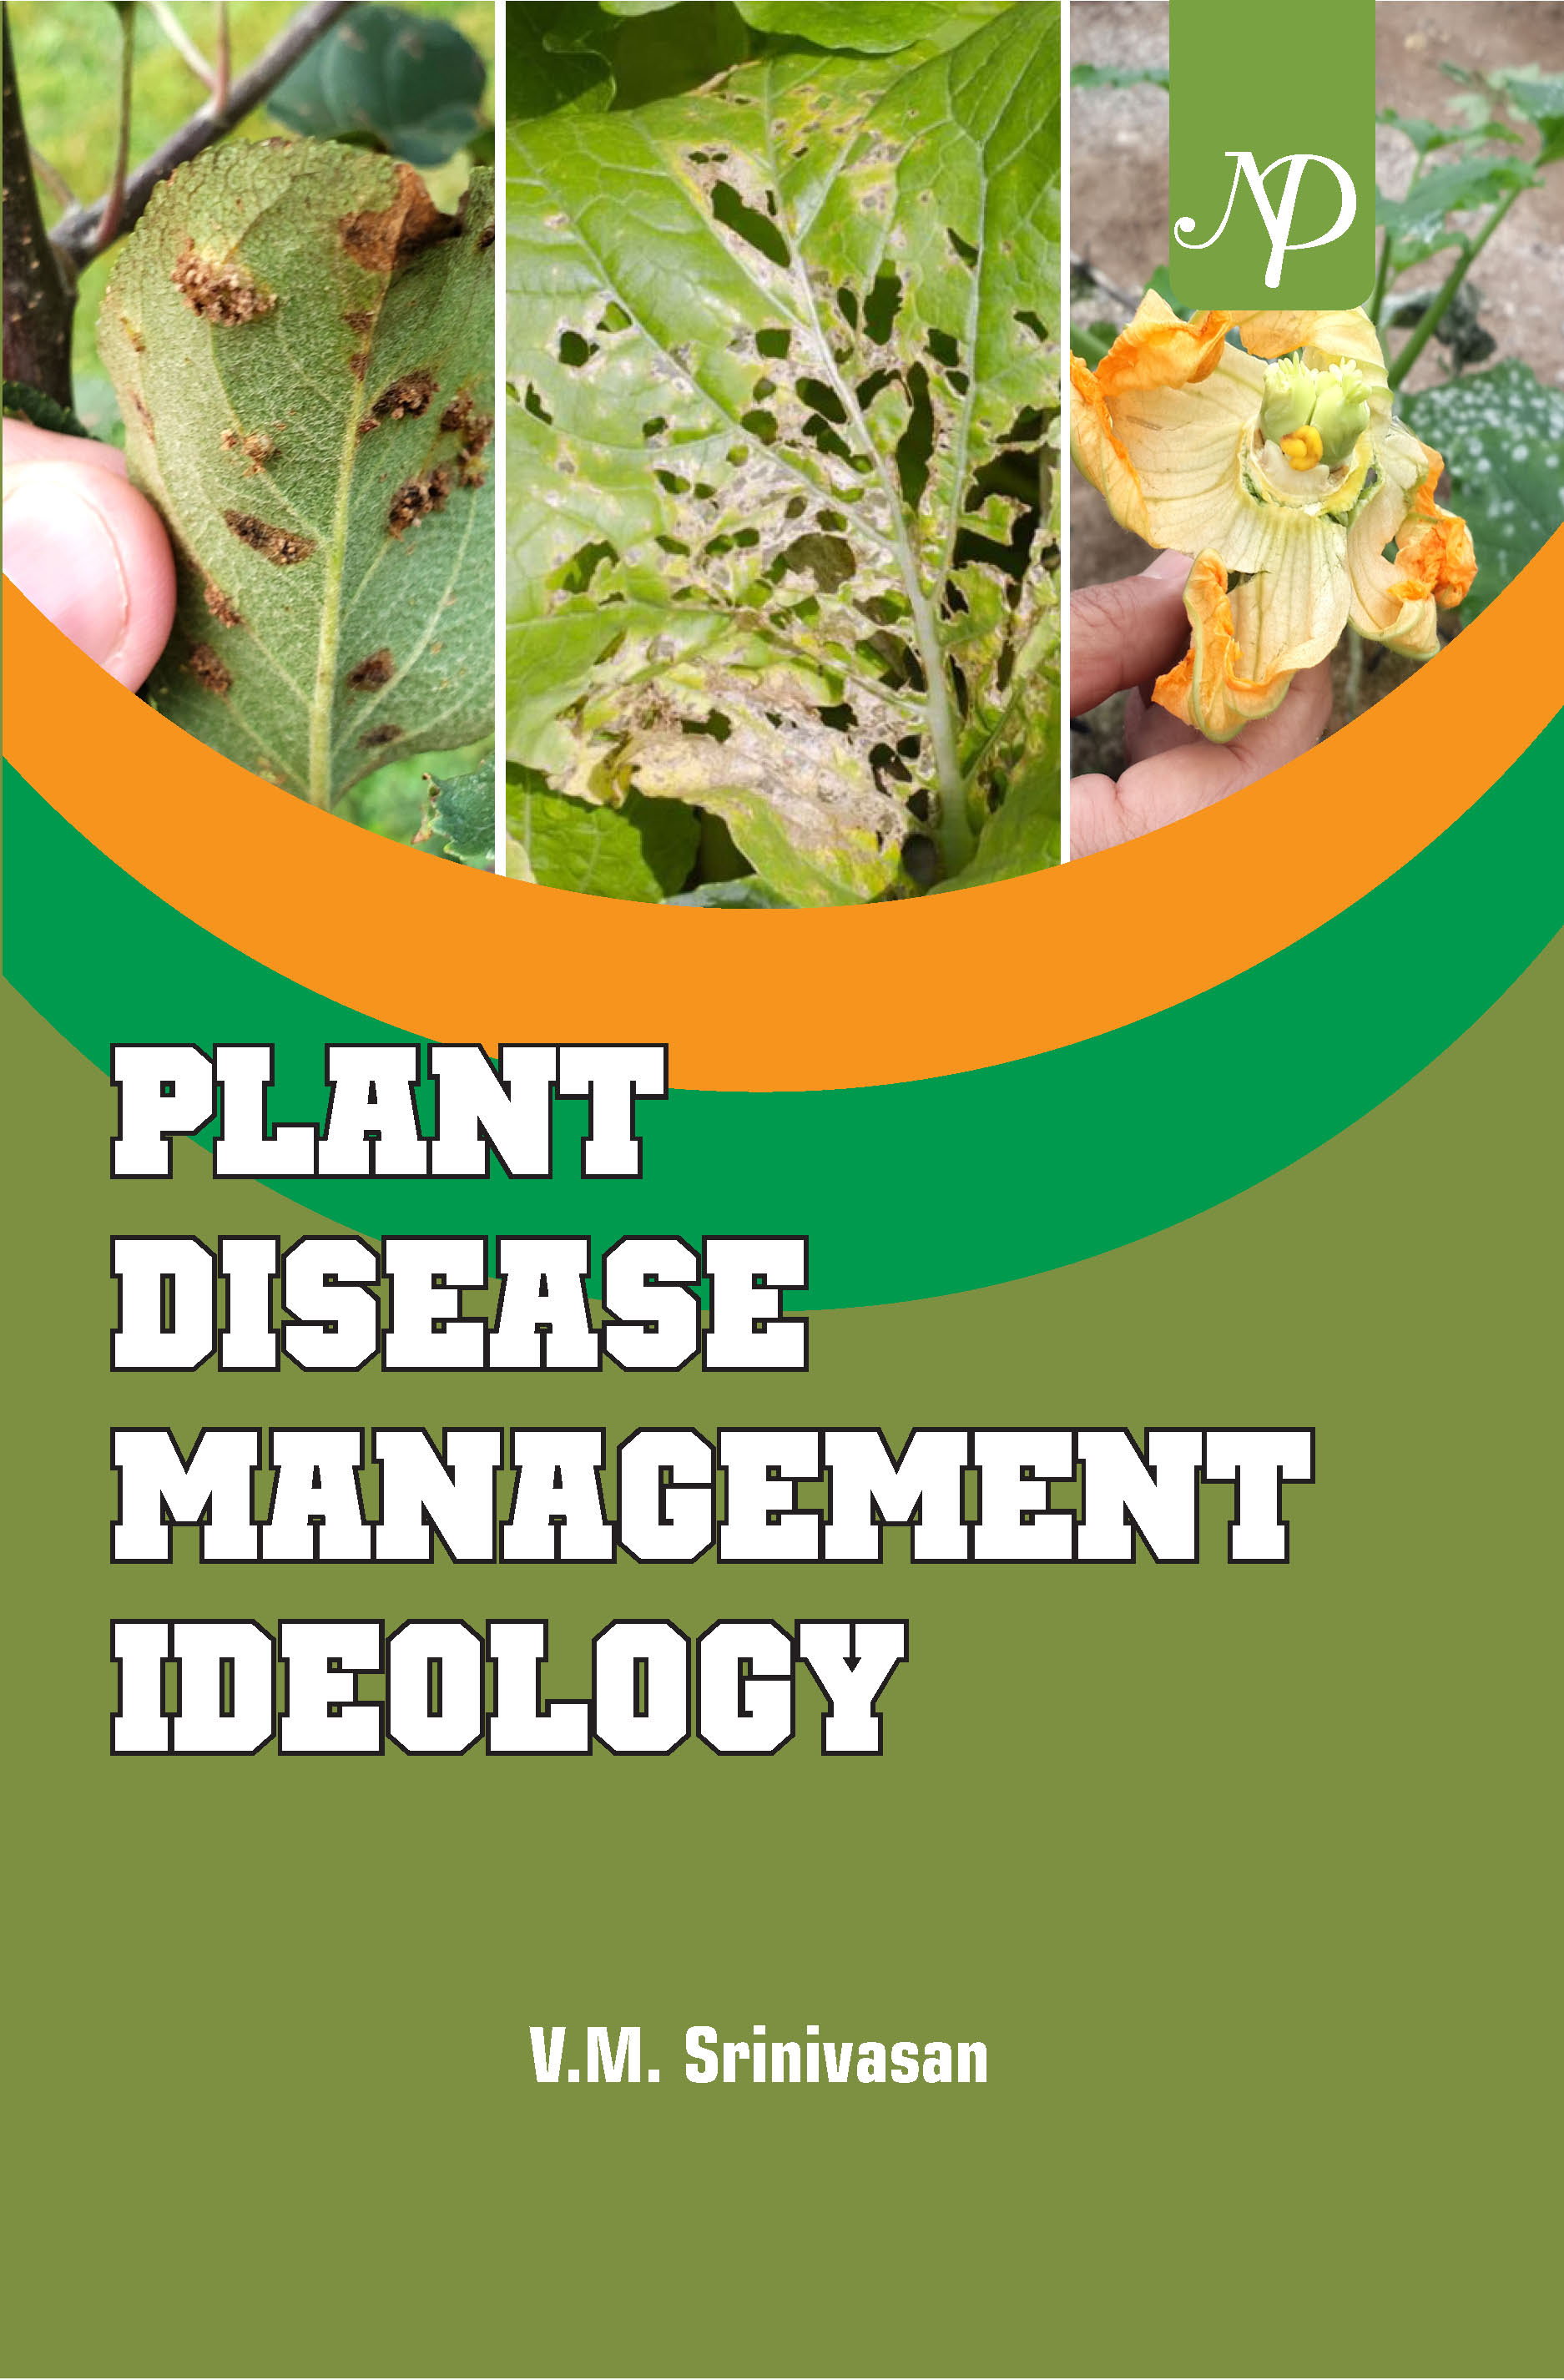 Plant Disease menagement Ideology Cover.jpg